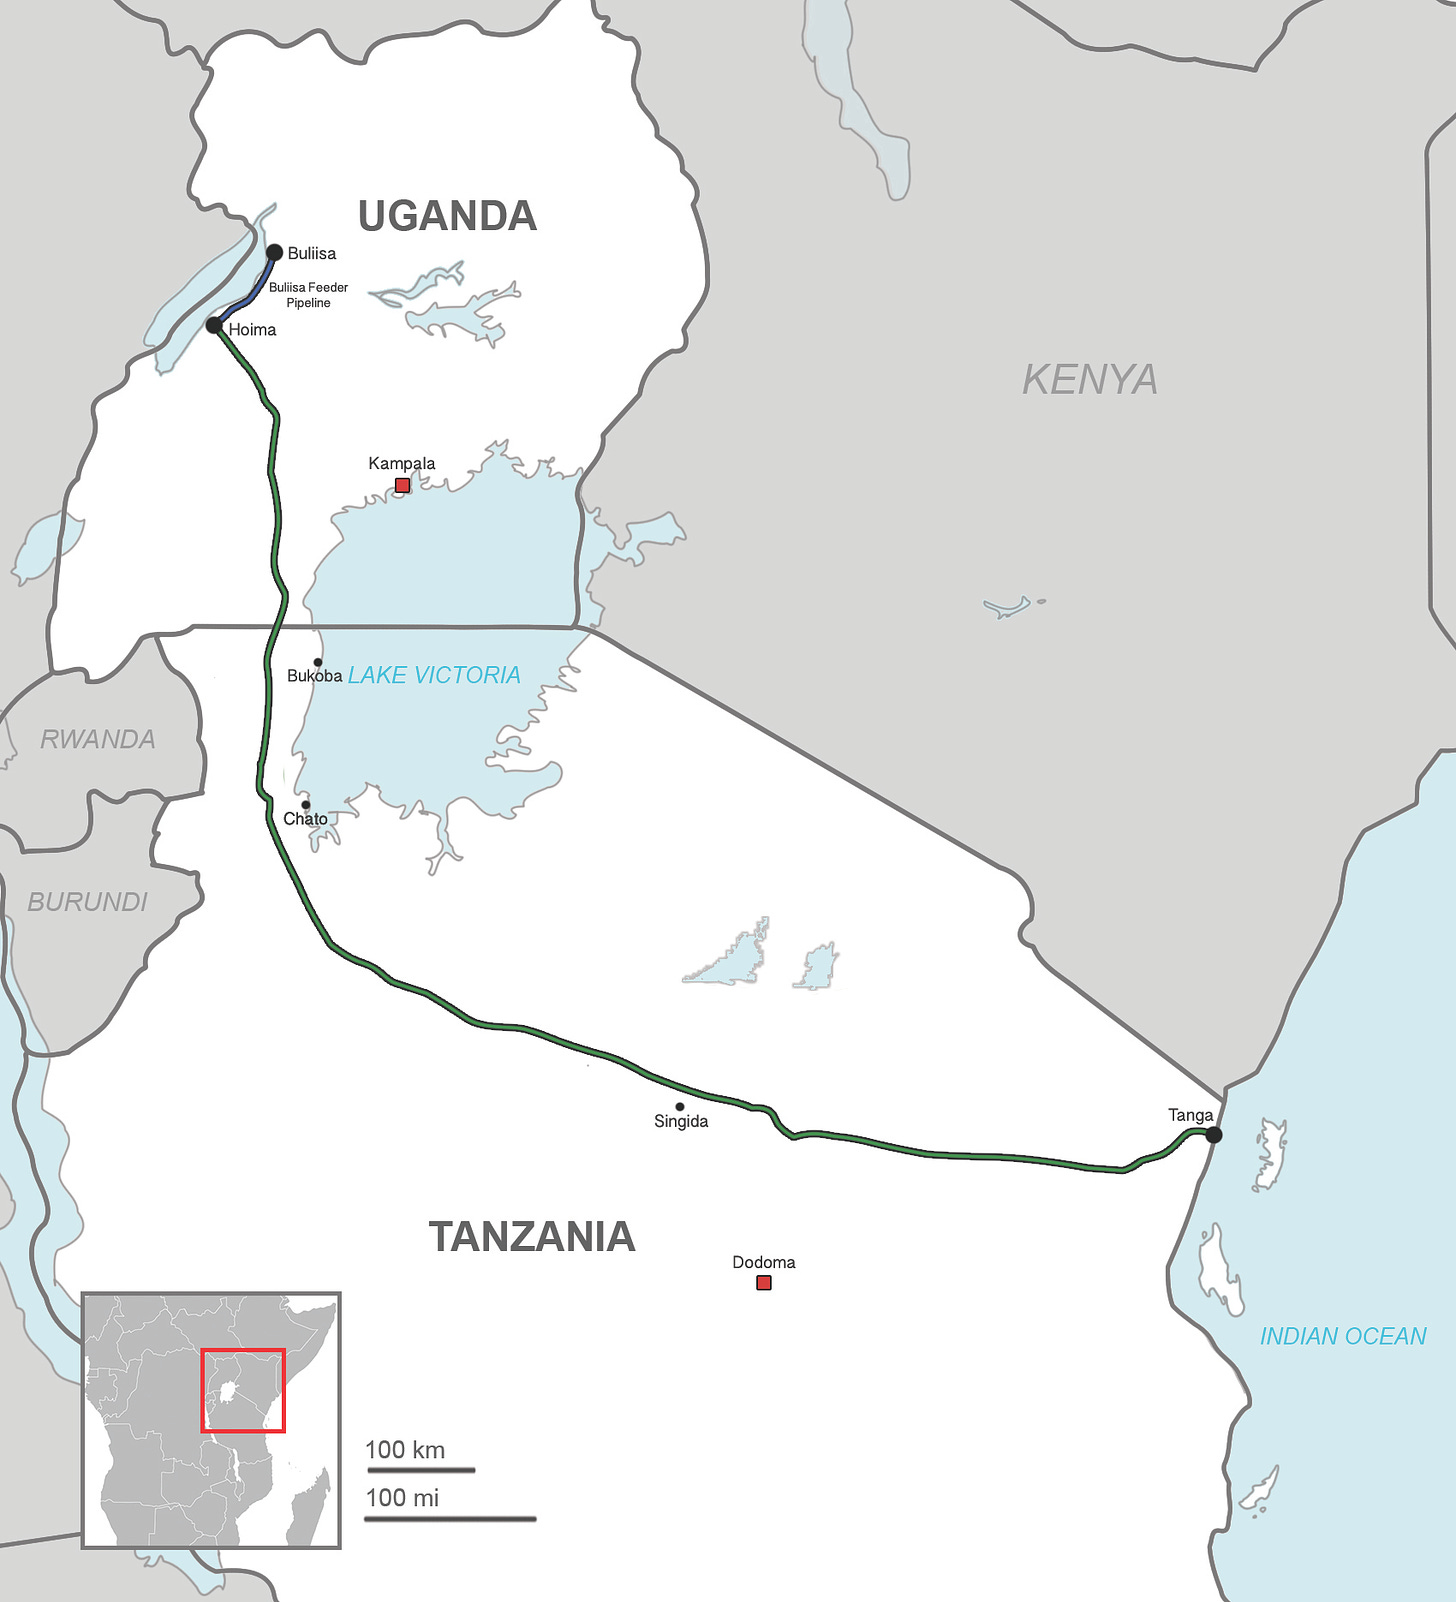 Uganda-Tanzania Proposed Pipeline.jpg